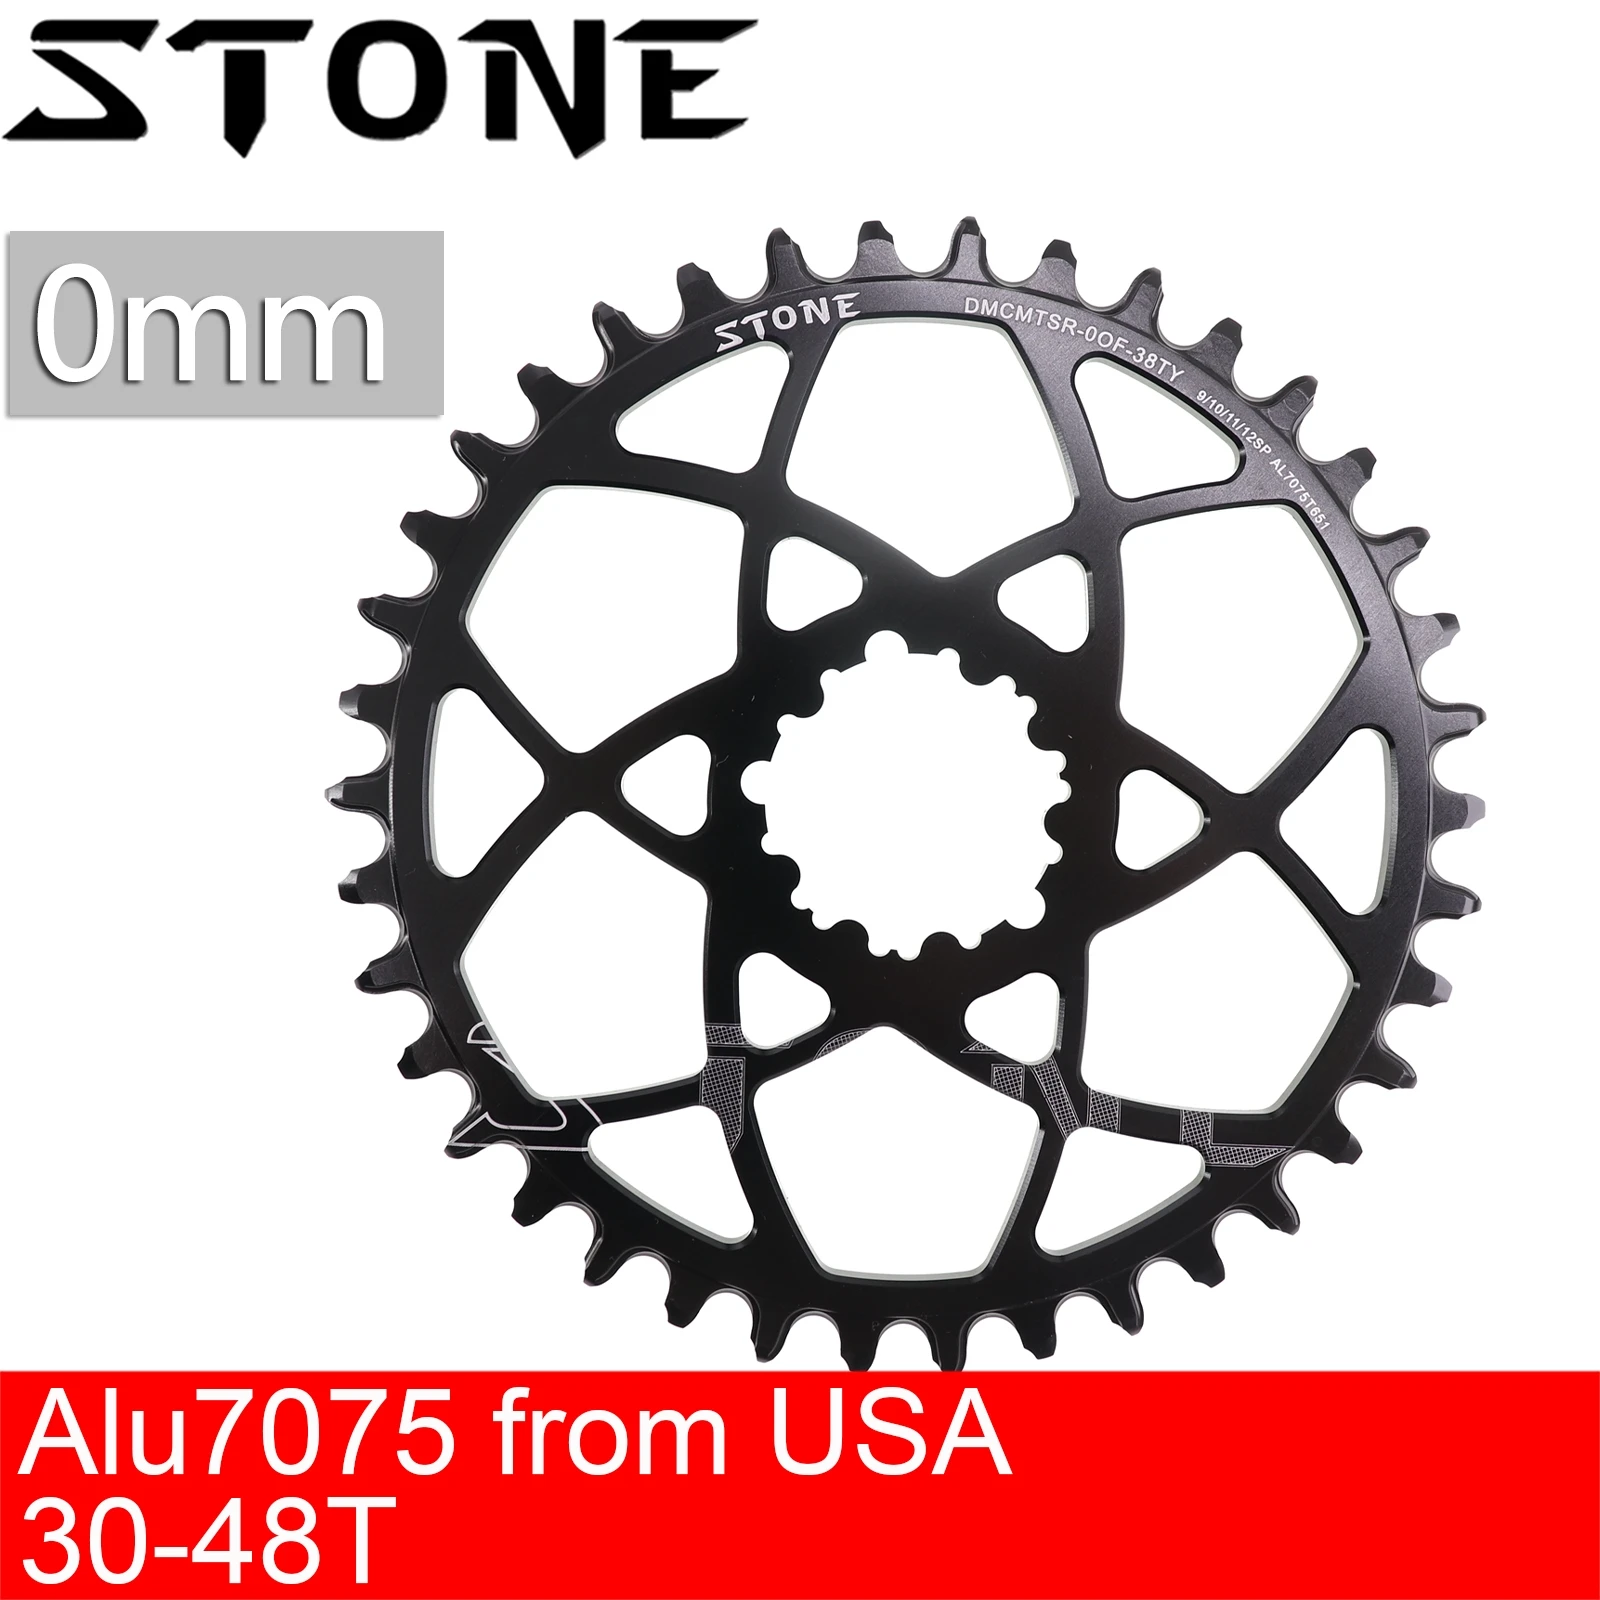 

Stone Round Bike Chainring 0mm Offset for Sram X9 X0 XX1 X1 BB30 Direct Mount Bicycle 30T 32T 34T 36T 38T 40T 42T 44T 46T 48T